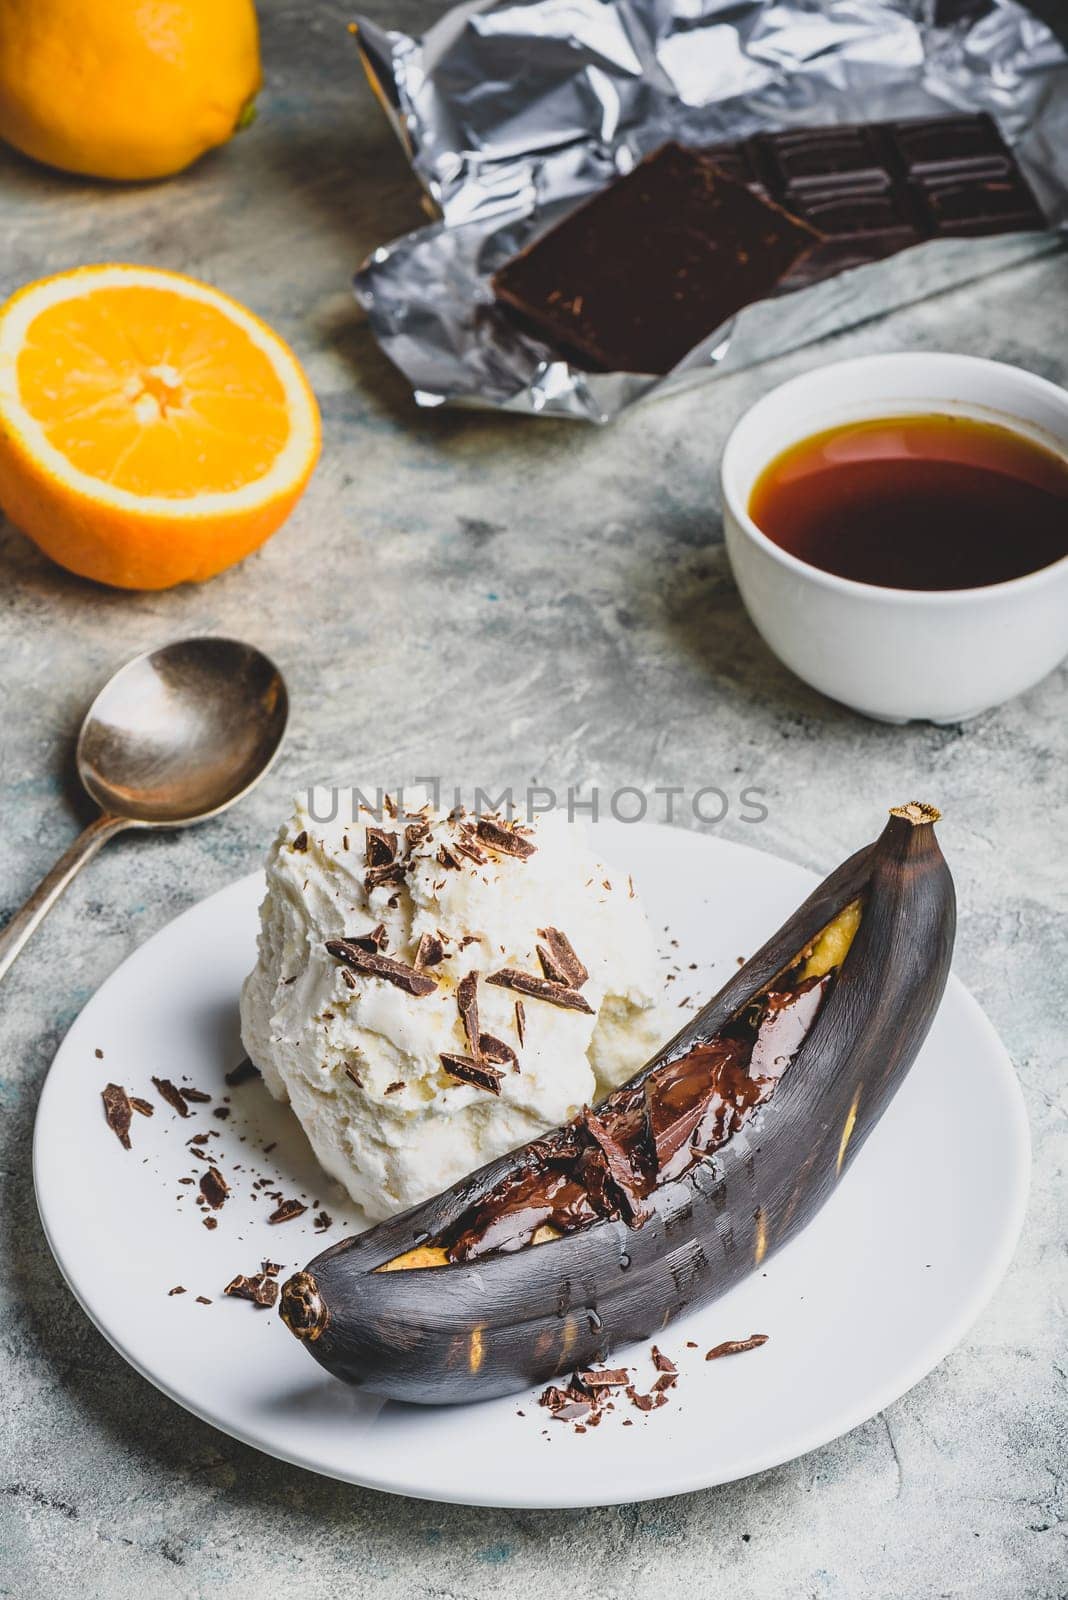 Grilled banana with dark chocolate and vanilla ice cream. by Seva_blsv